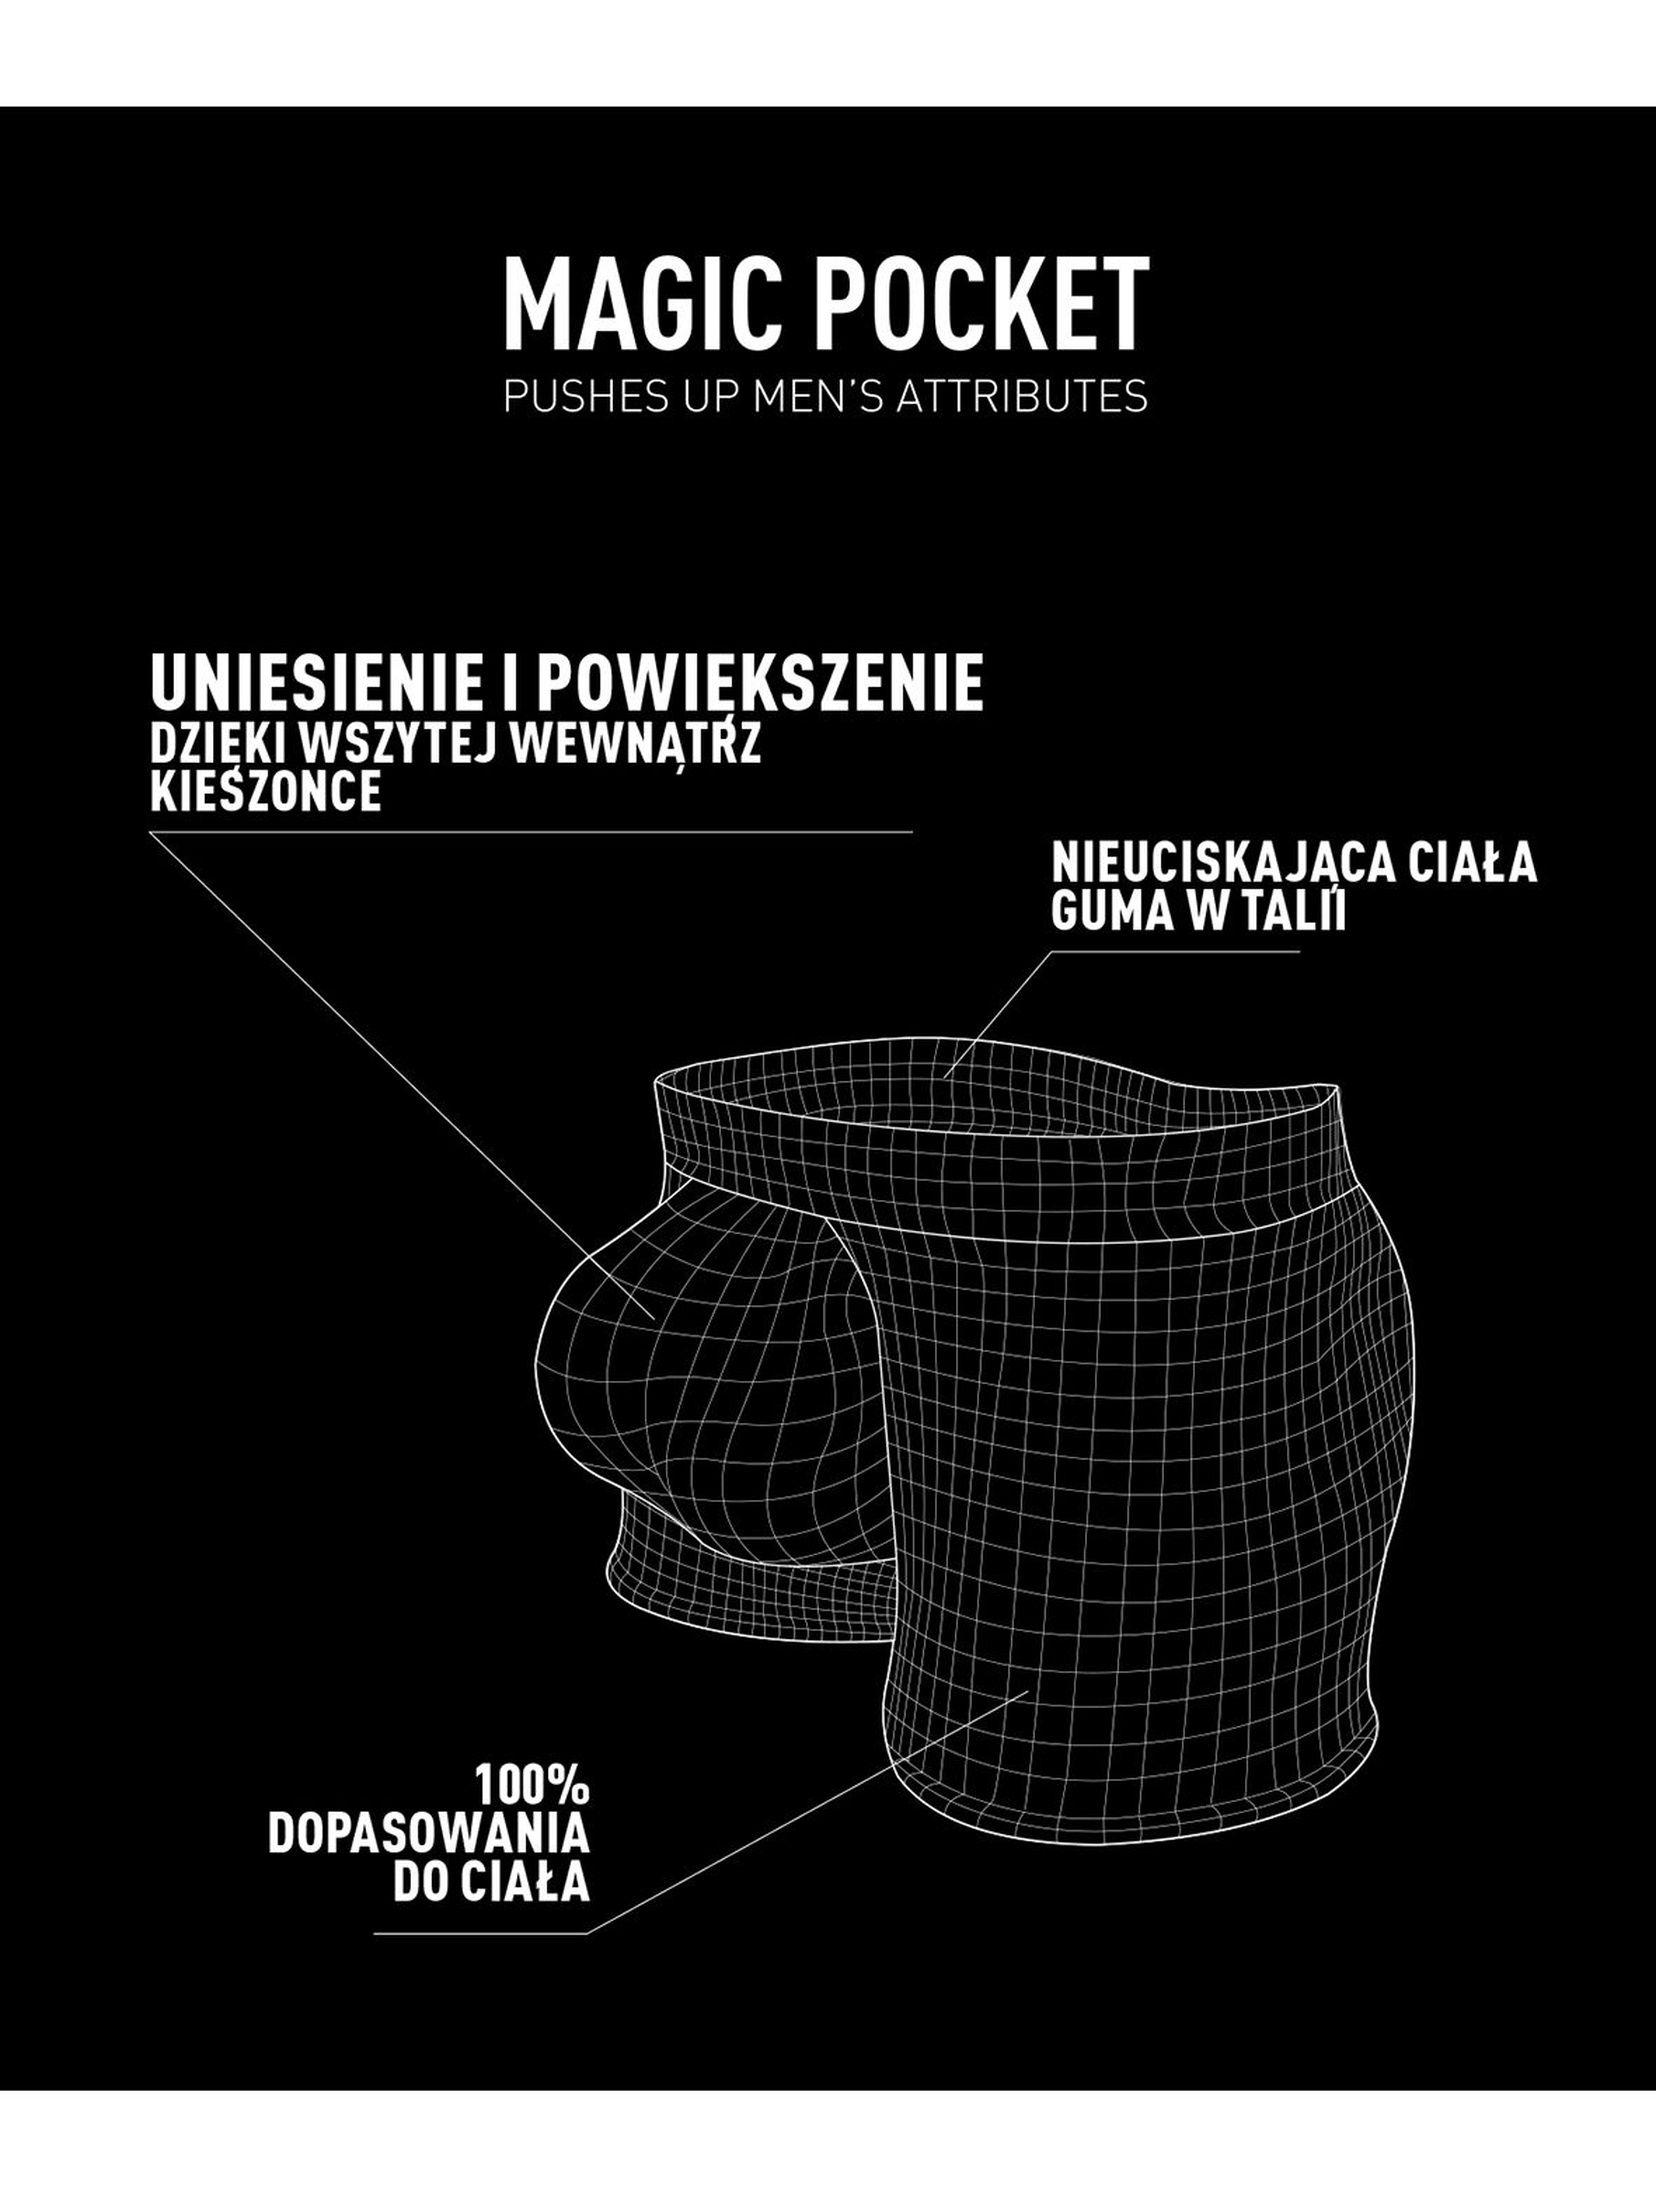 Bokserki męskie magic pocket - różowe